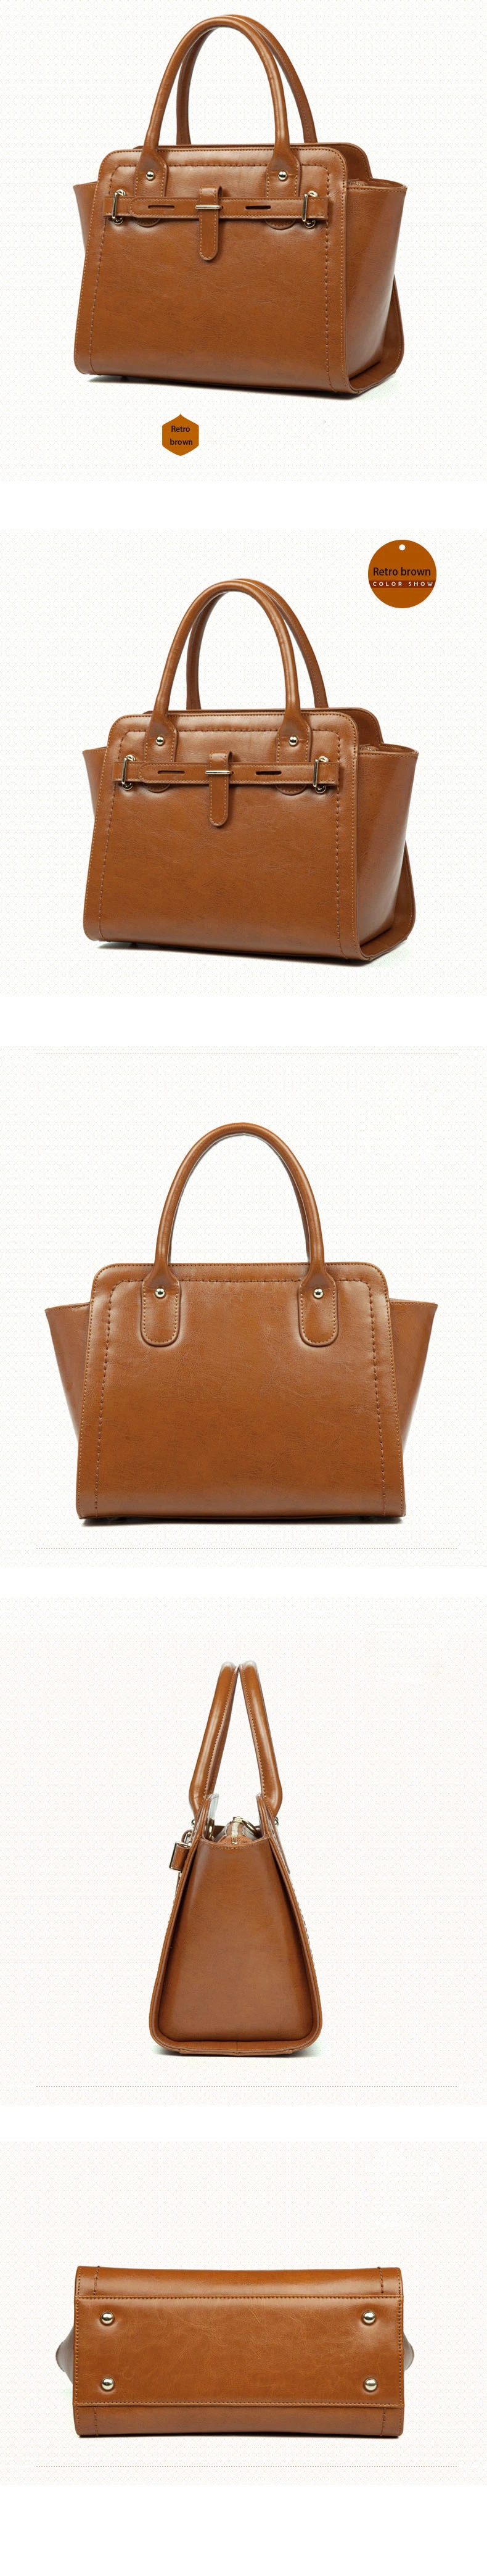 Factory Sales 2020 New European Cowhide Fashion Leather Women Bag